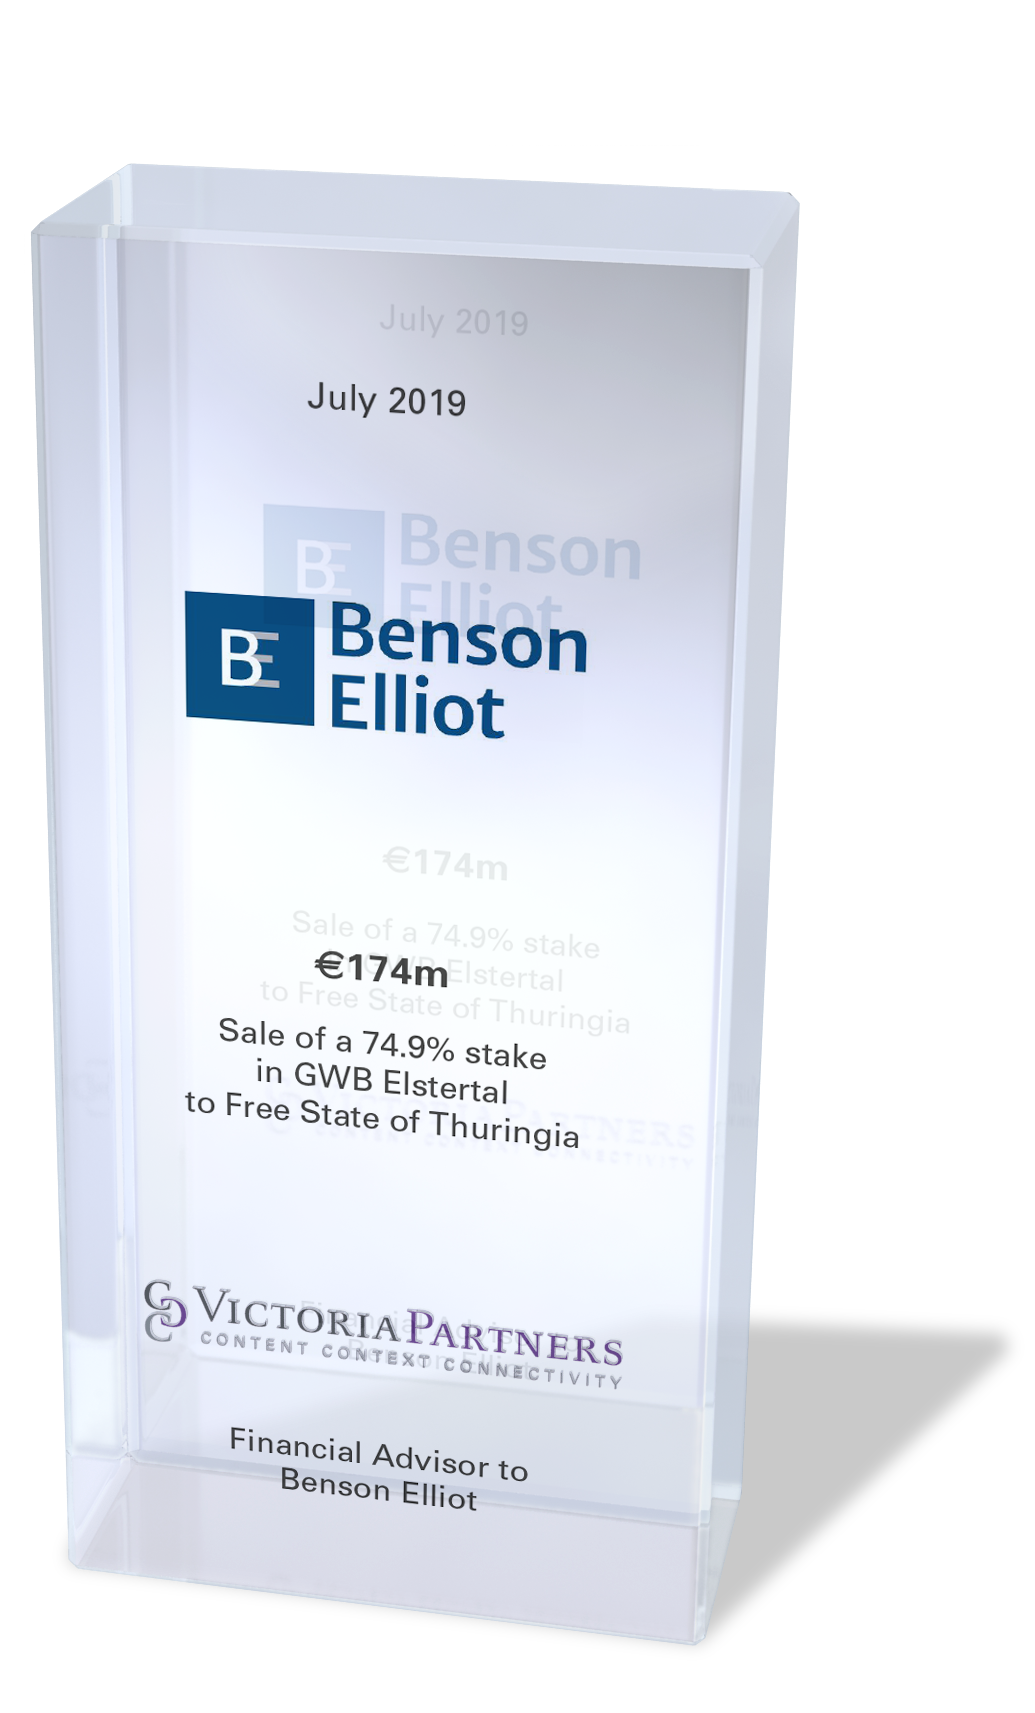 VICTORIAPARTNERS - Financial Advisor to Benson Elliot - July 2019